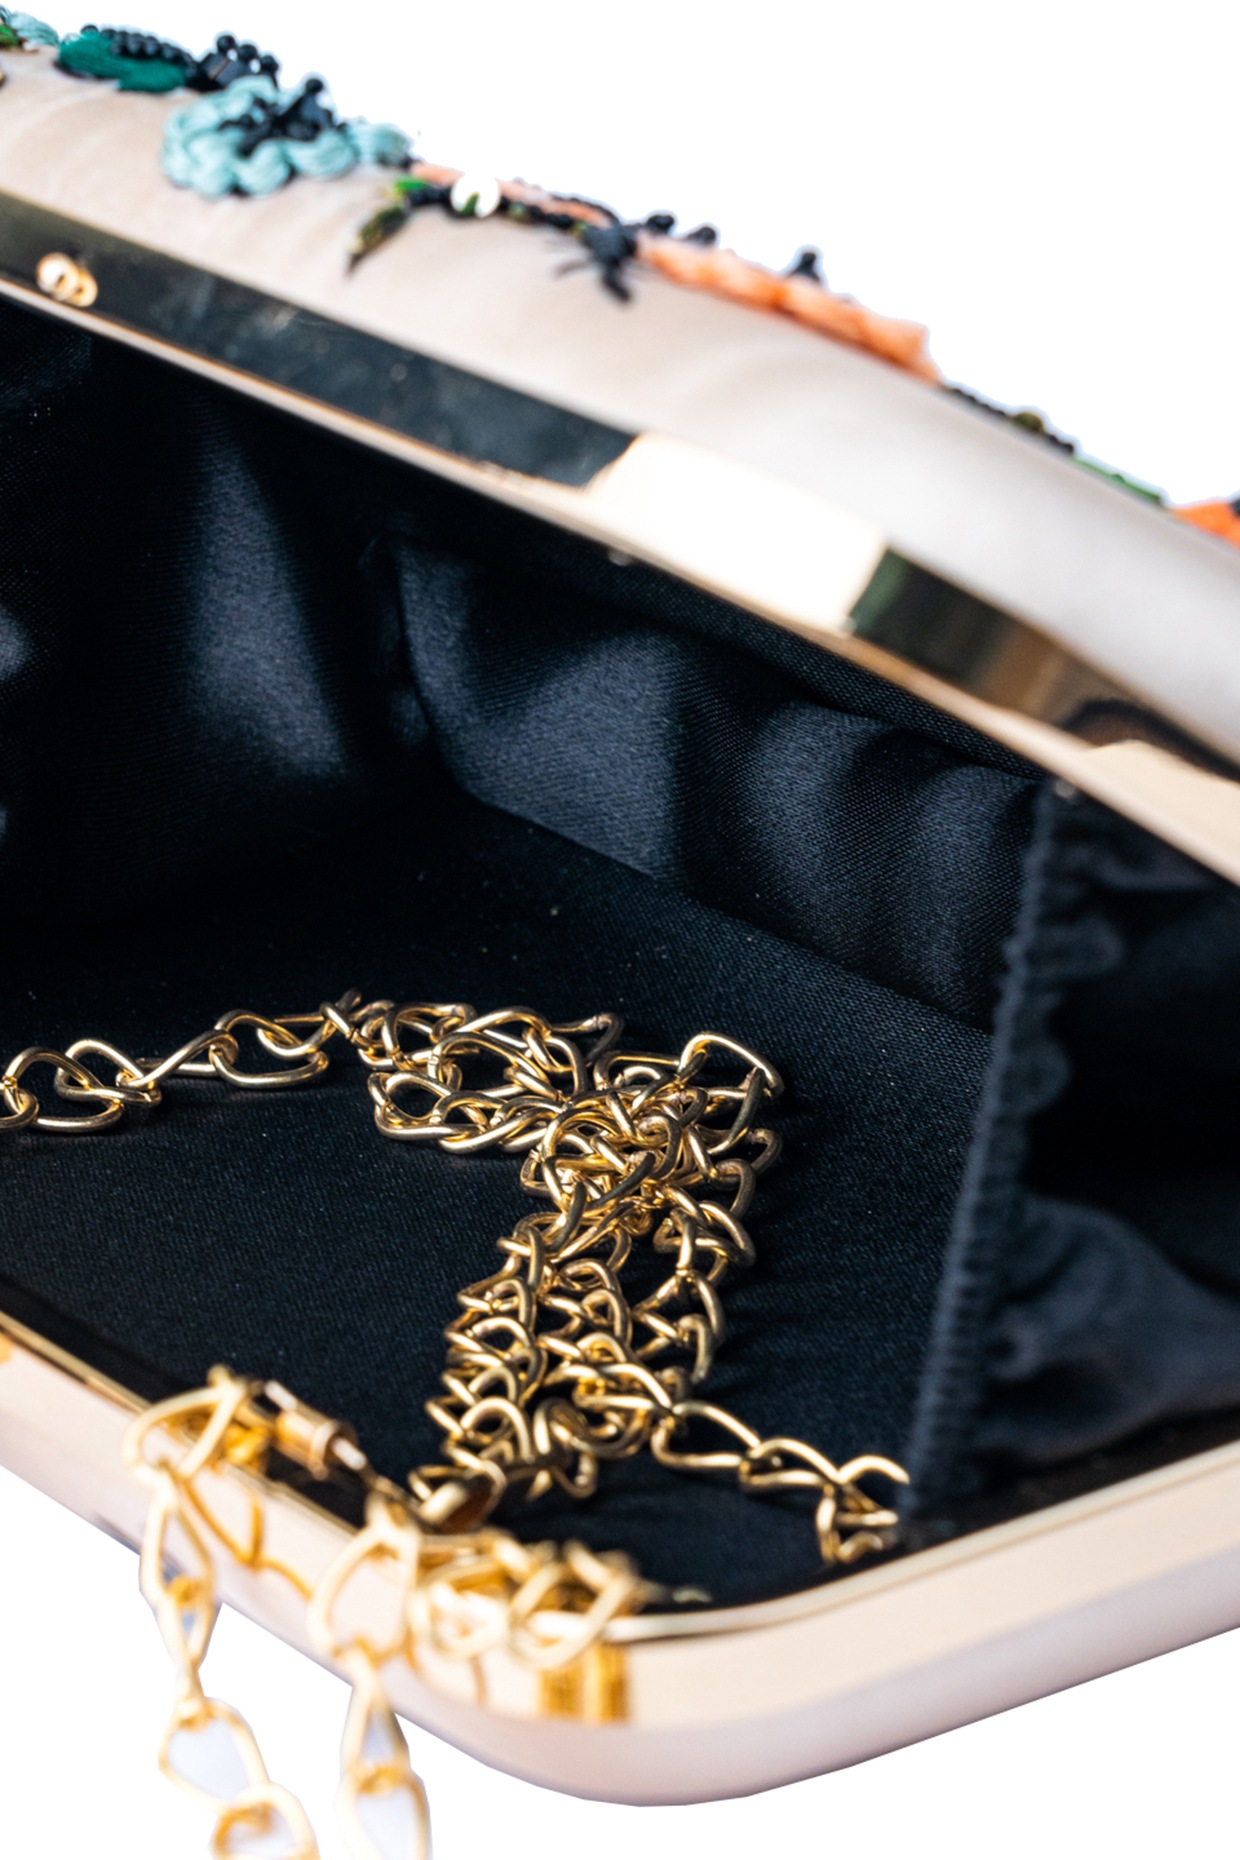 Black Color Women Evening Bag Luxury Wedding Party Purse Box Clutch Purse  Sequin | eBay